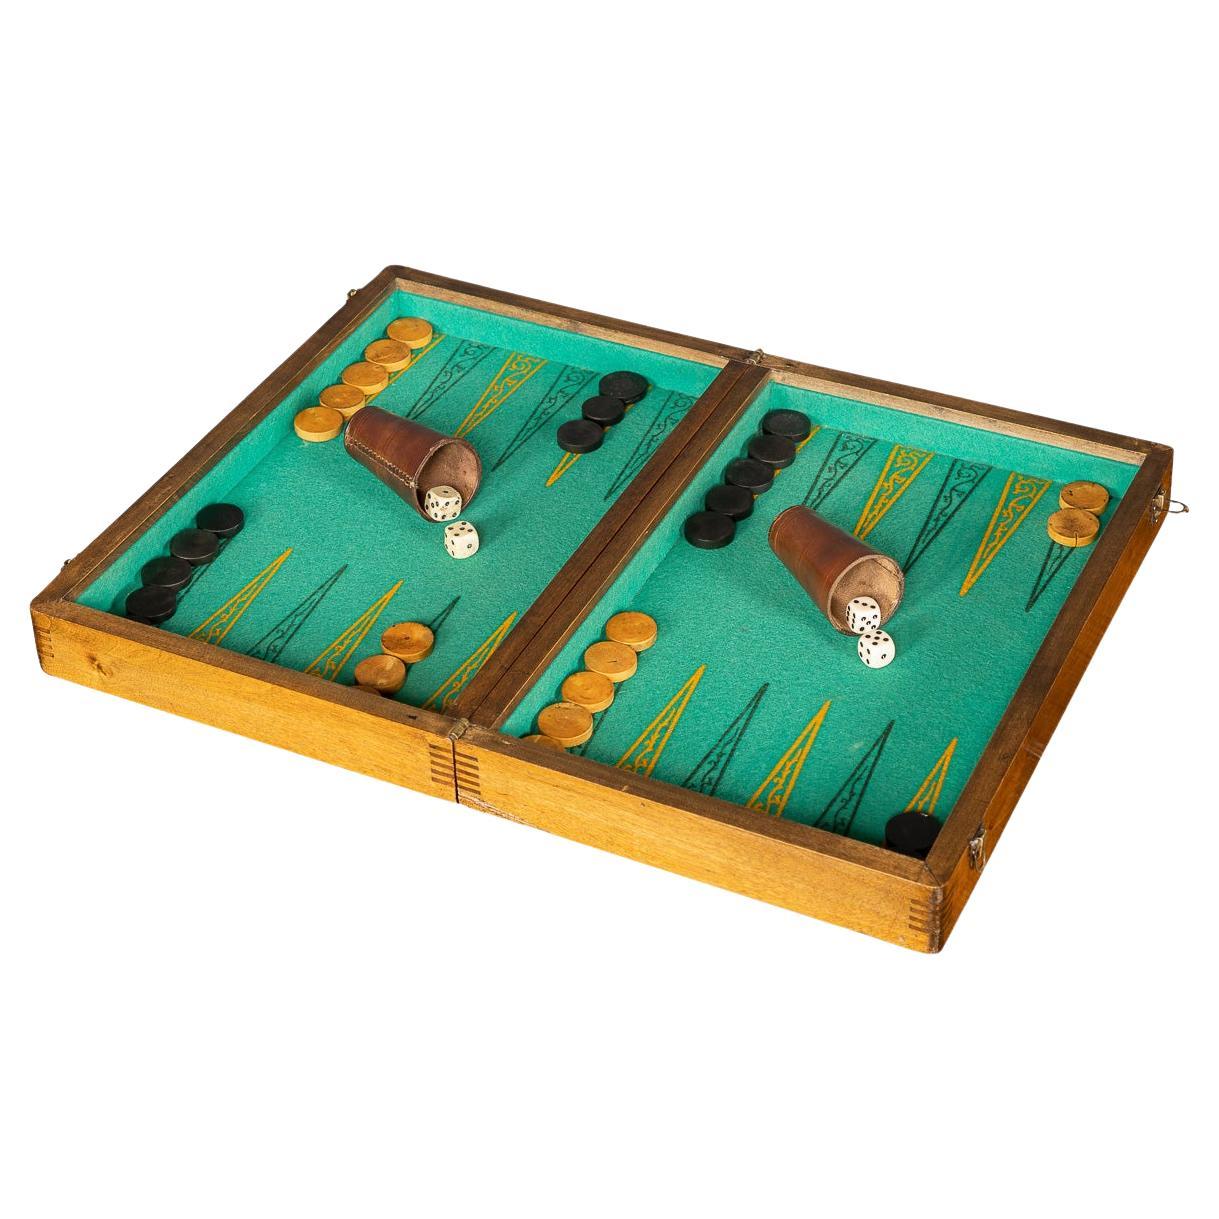 20th Century British Backgammon & Draughts Game Box, circa 1950